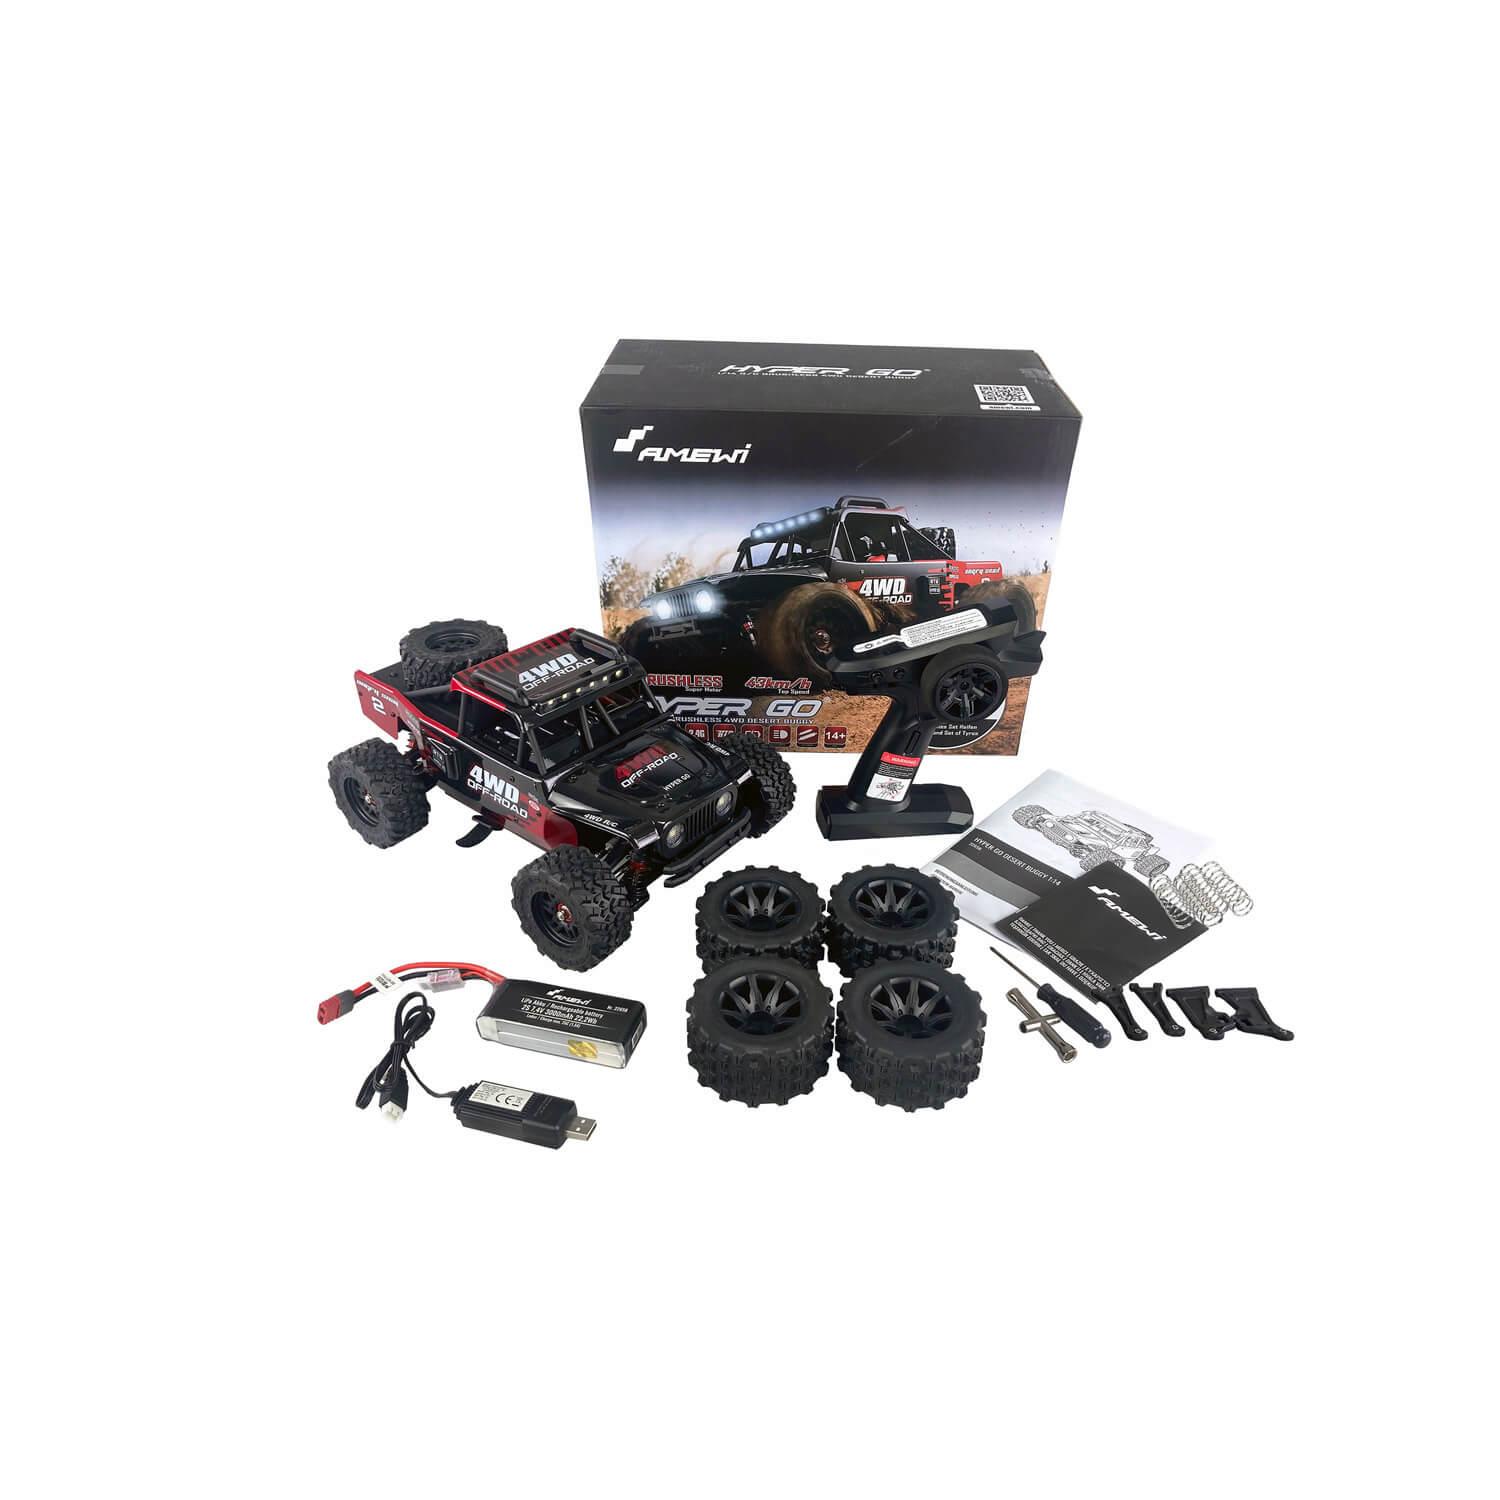 Buggy RTR Hyper GO Desert brushless 4WD - noir/rouge - Jeux et jouets Amewi  - Miniplanes